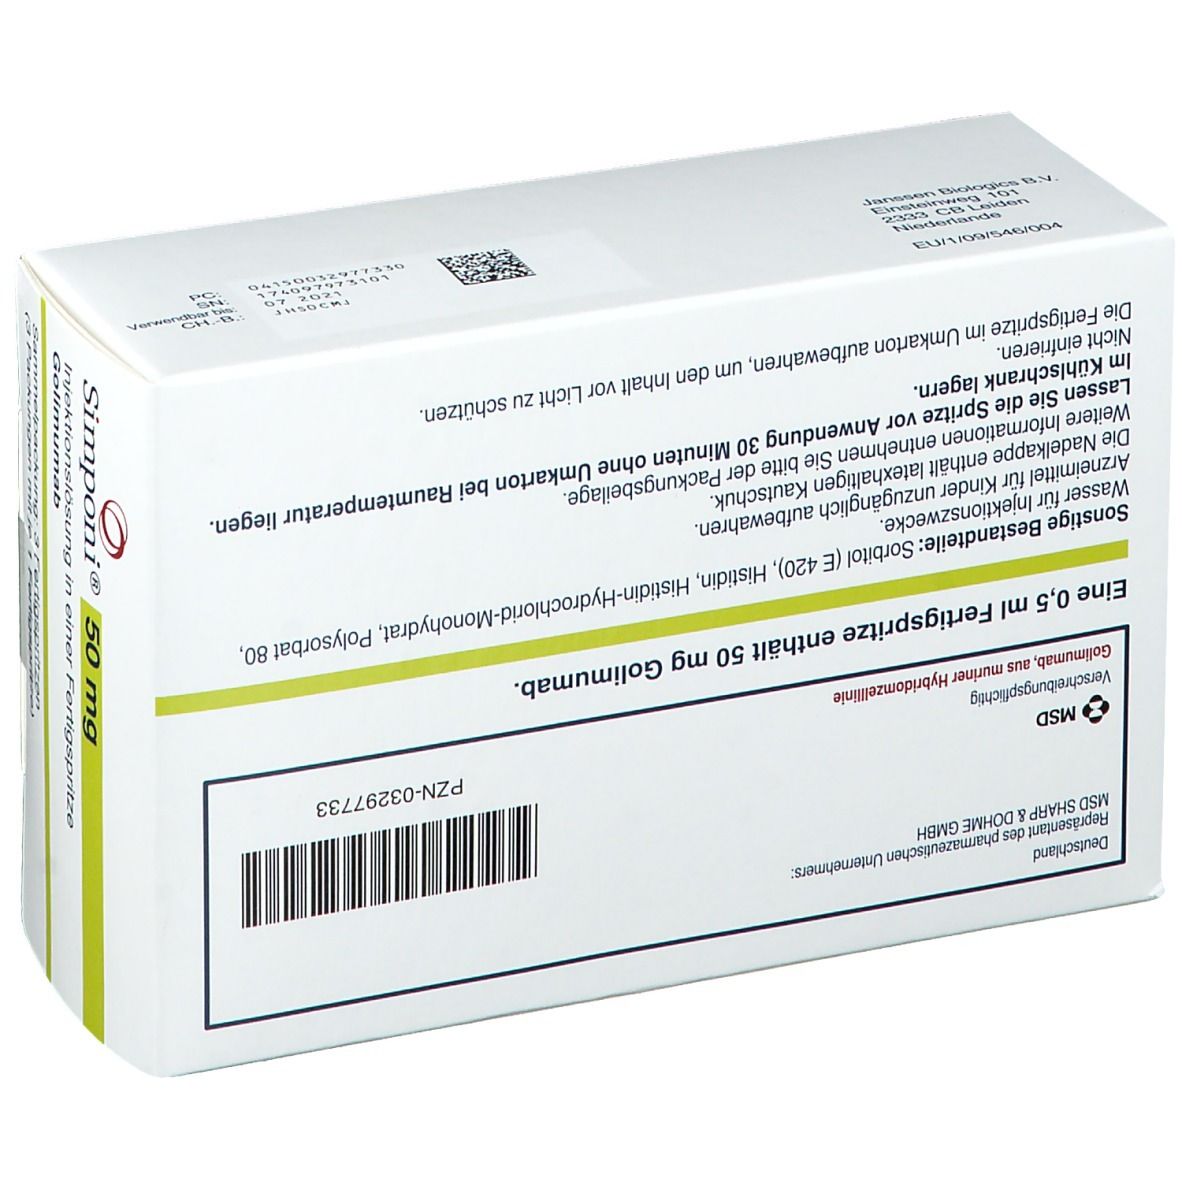 Simponi® 50 mg Injektionslösung